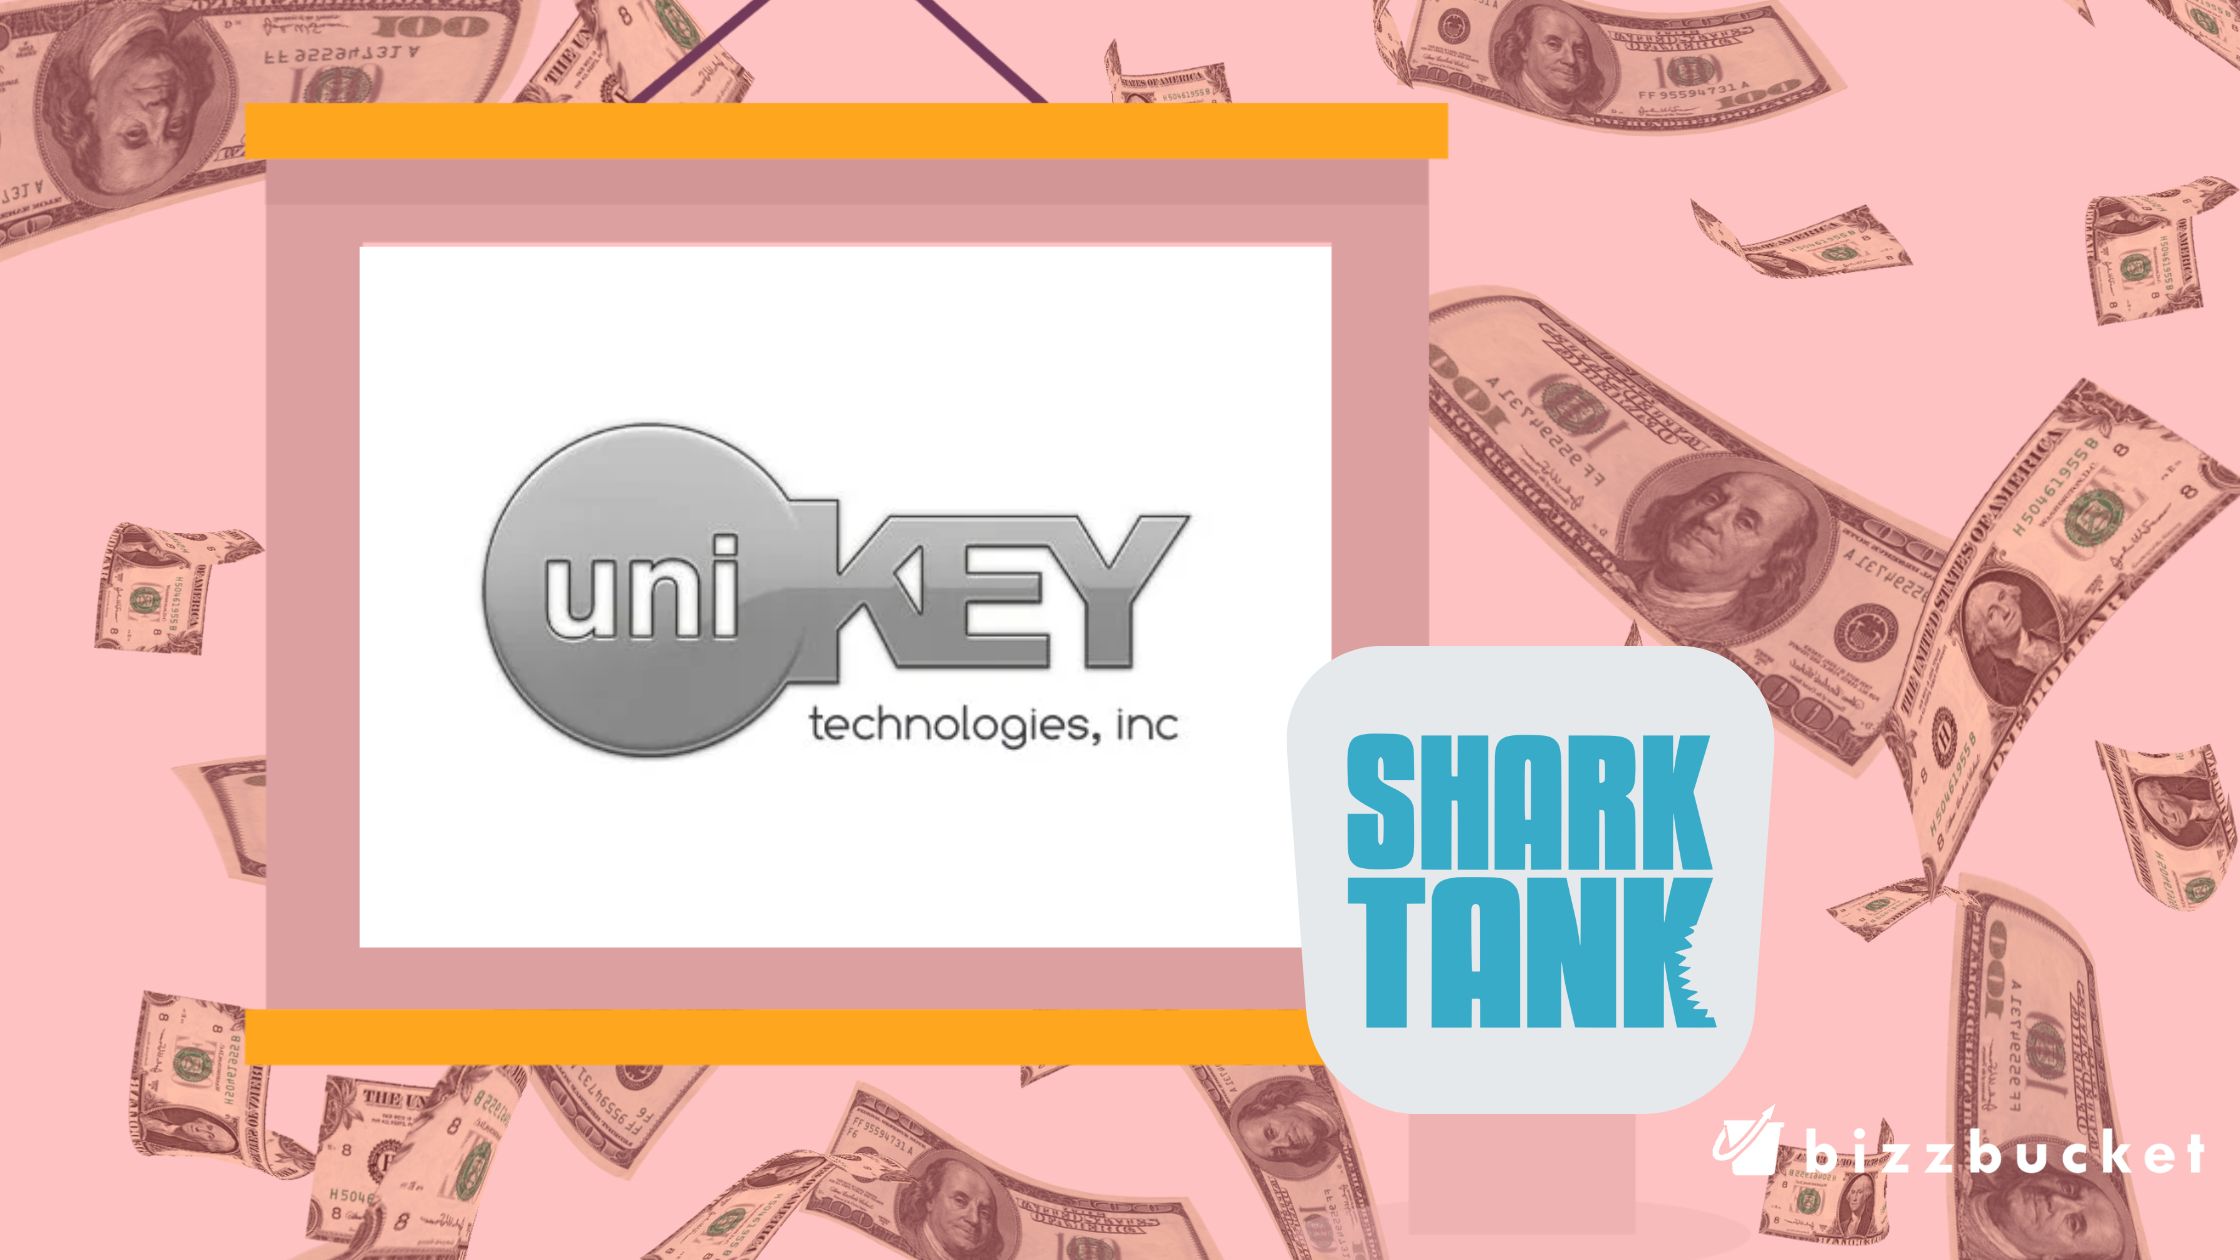 Unikey shark tank update